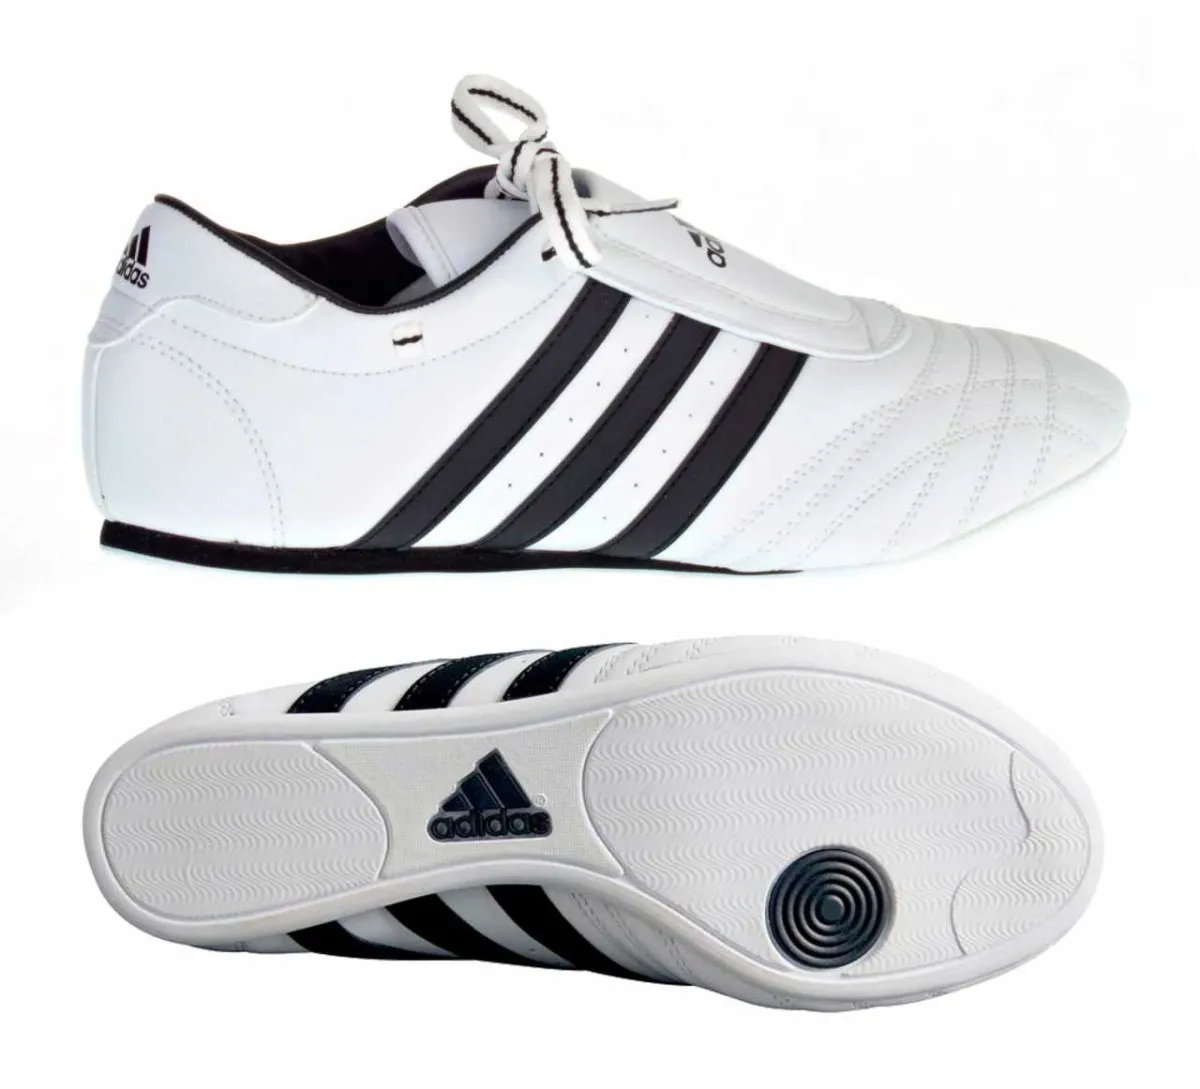 Adidas shoes SM II white